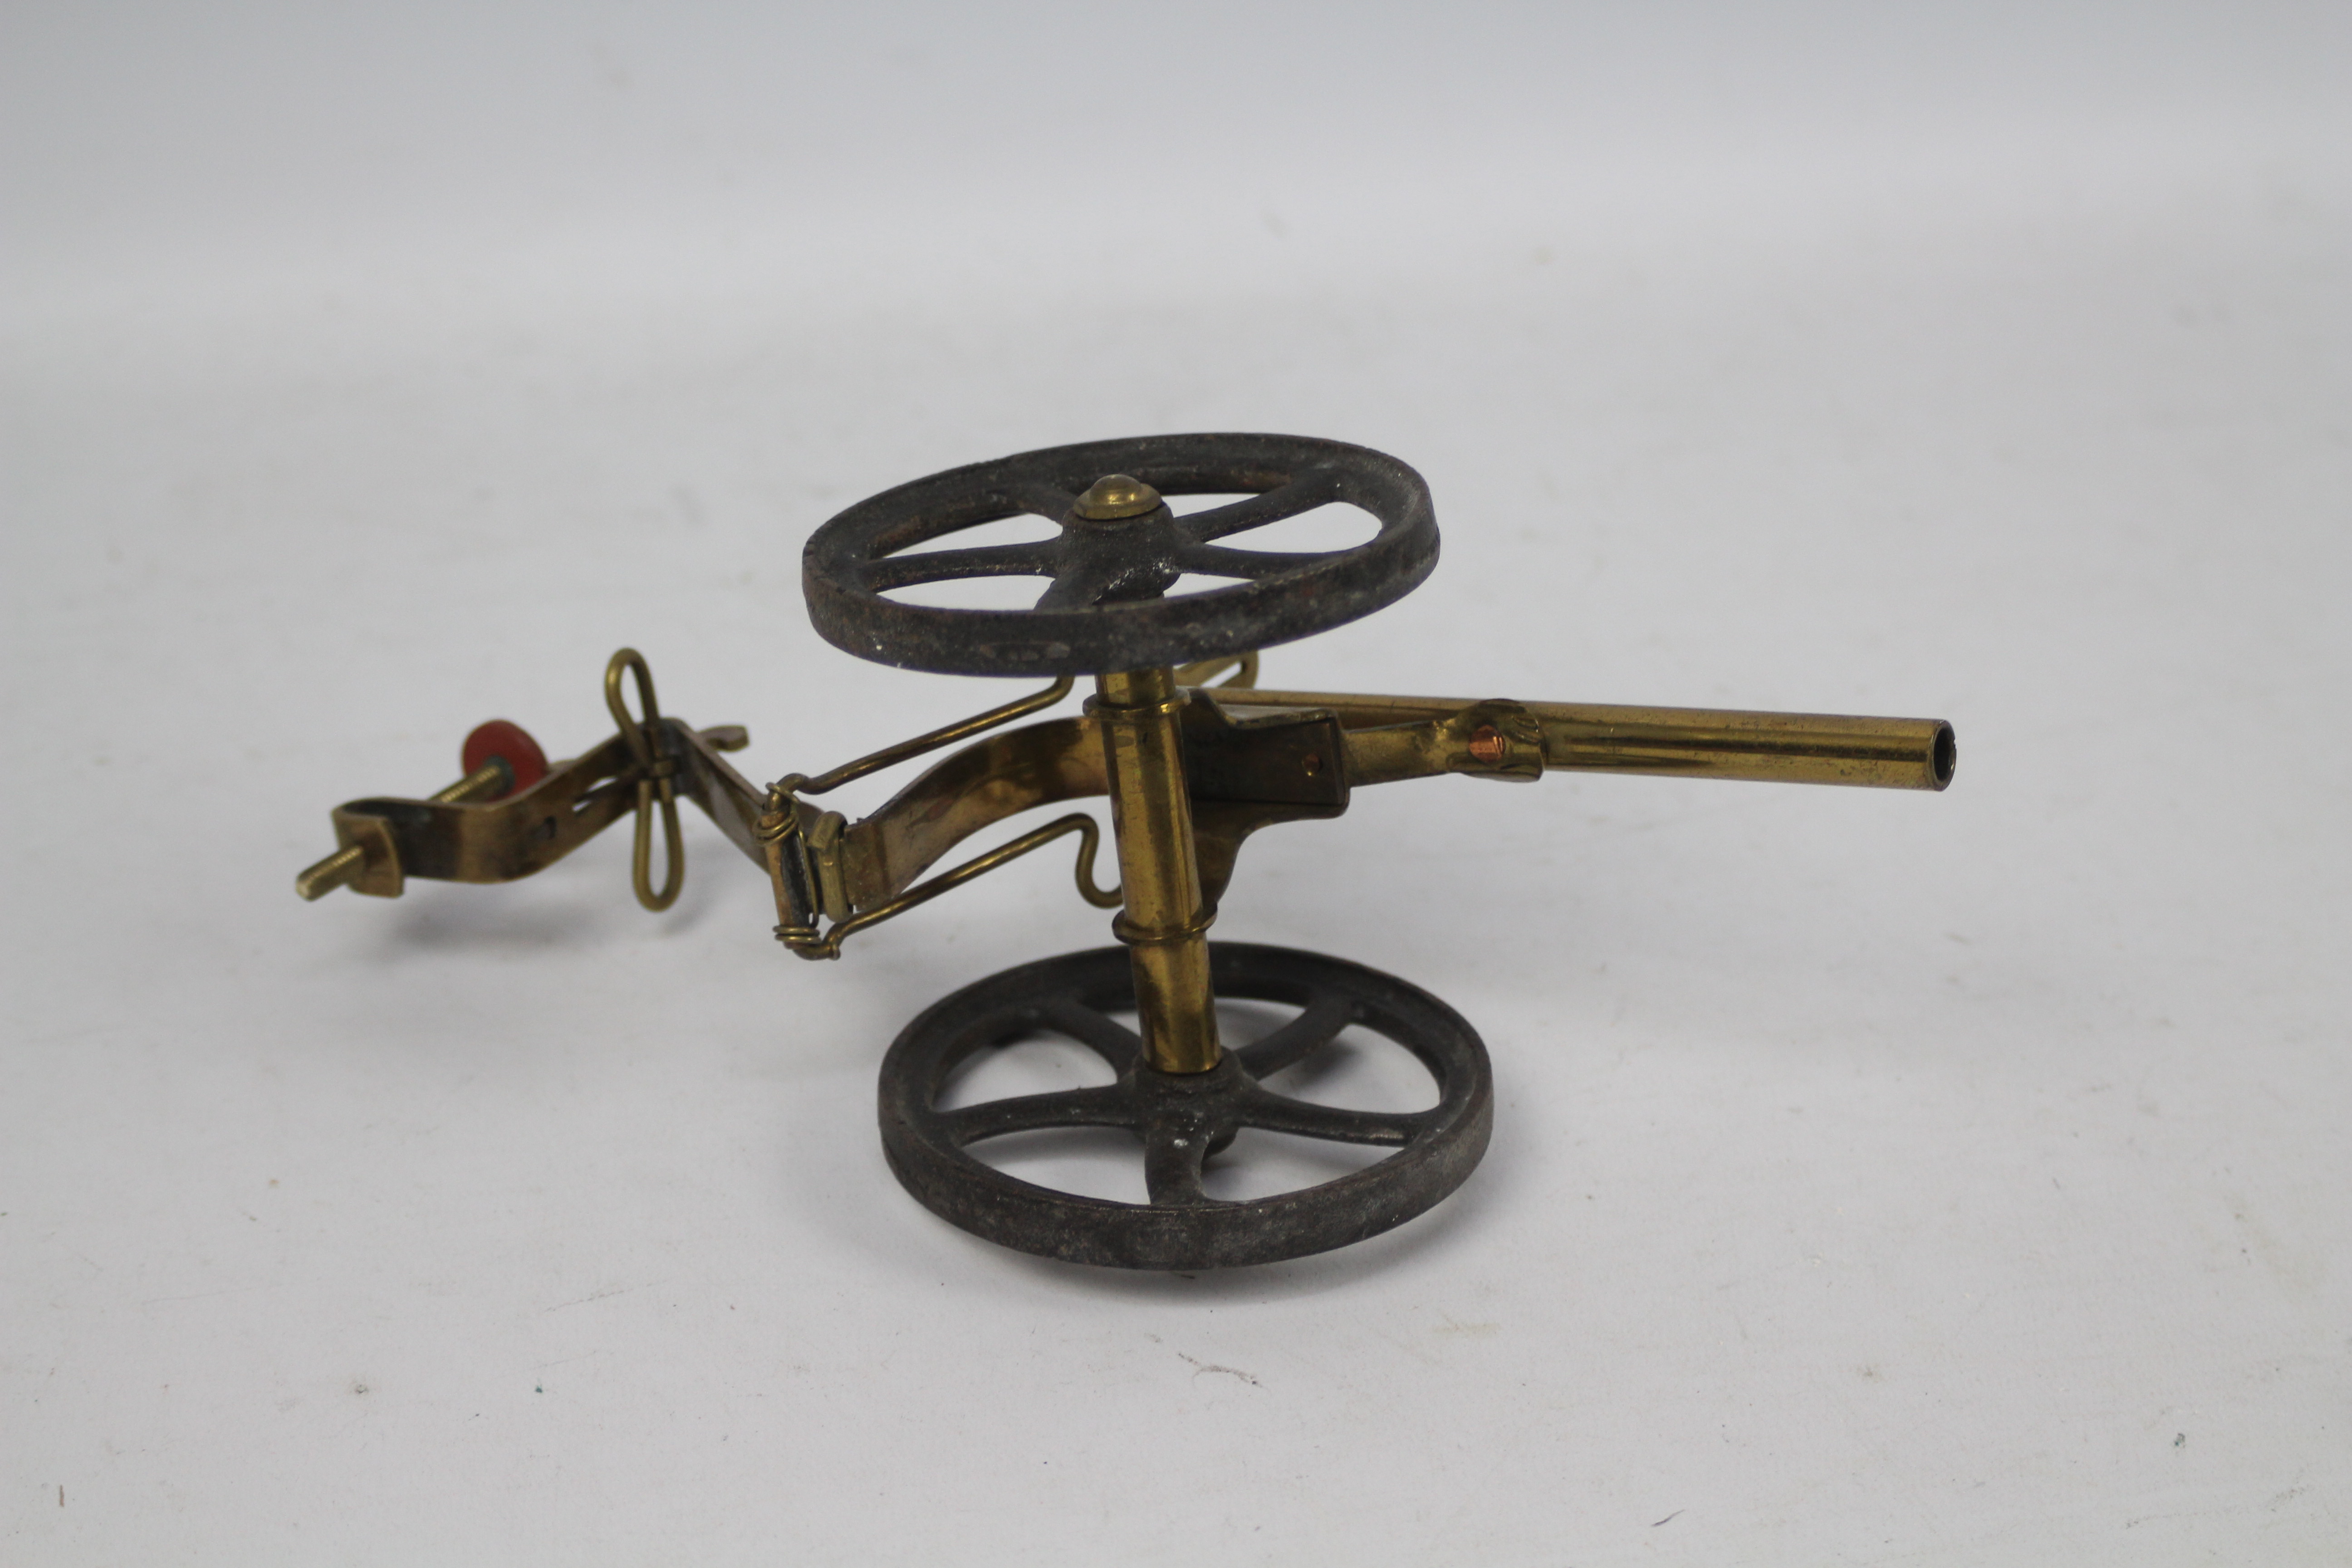 Lambton Parlour Game - a model Lambton Cannon / Gun with original box, - Image 5 of 5